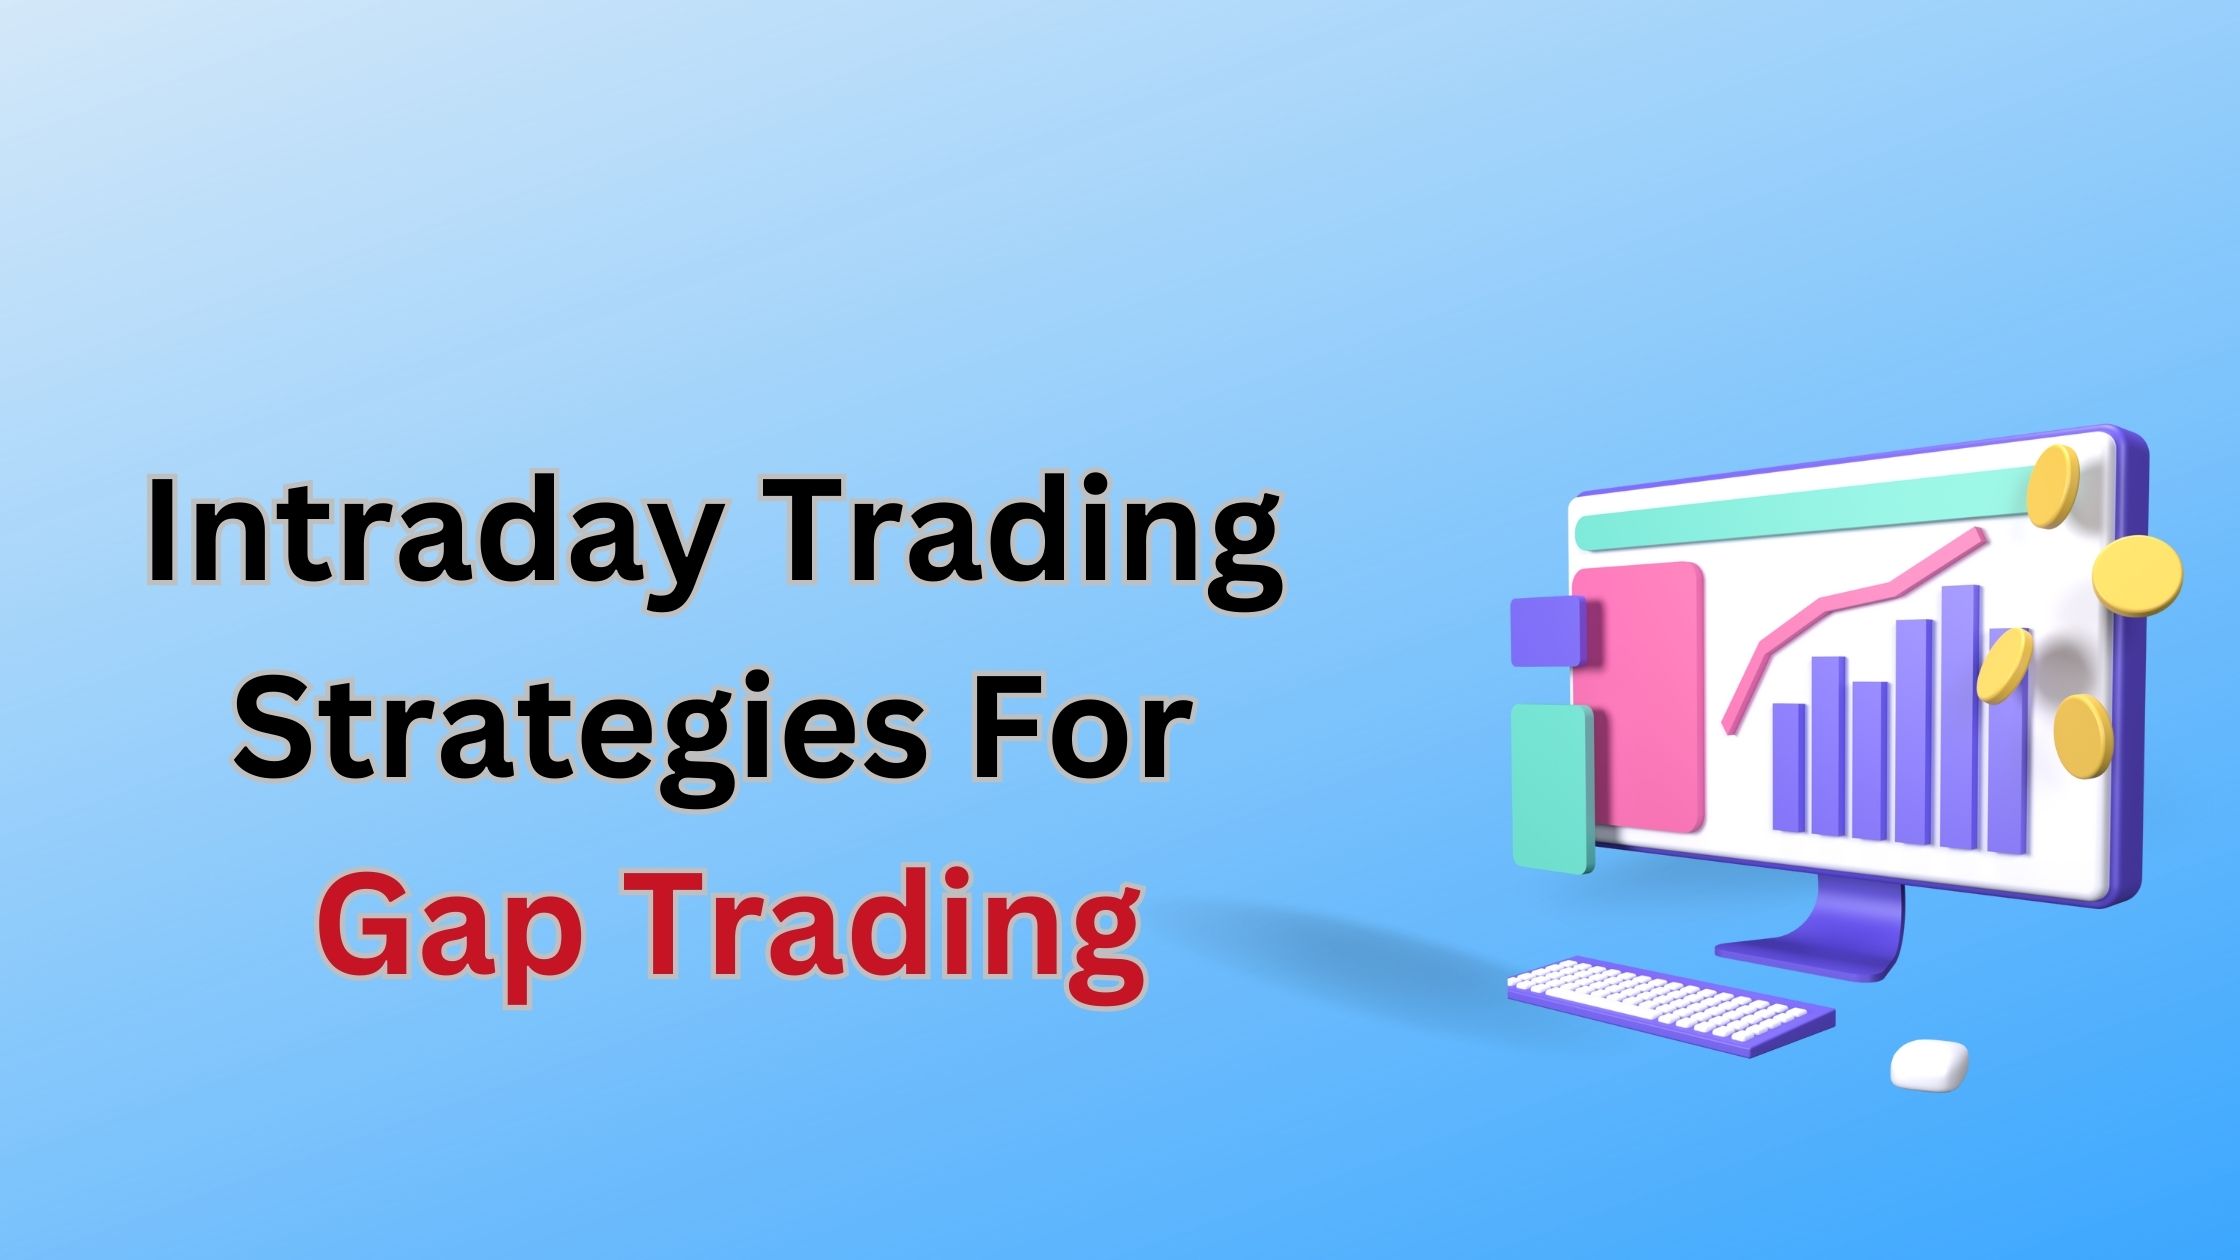 Intraday Trading Strategies: Gap Trading